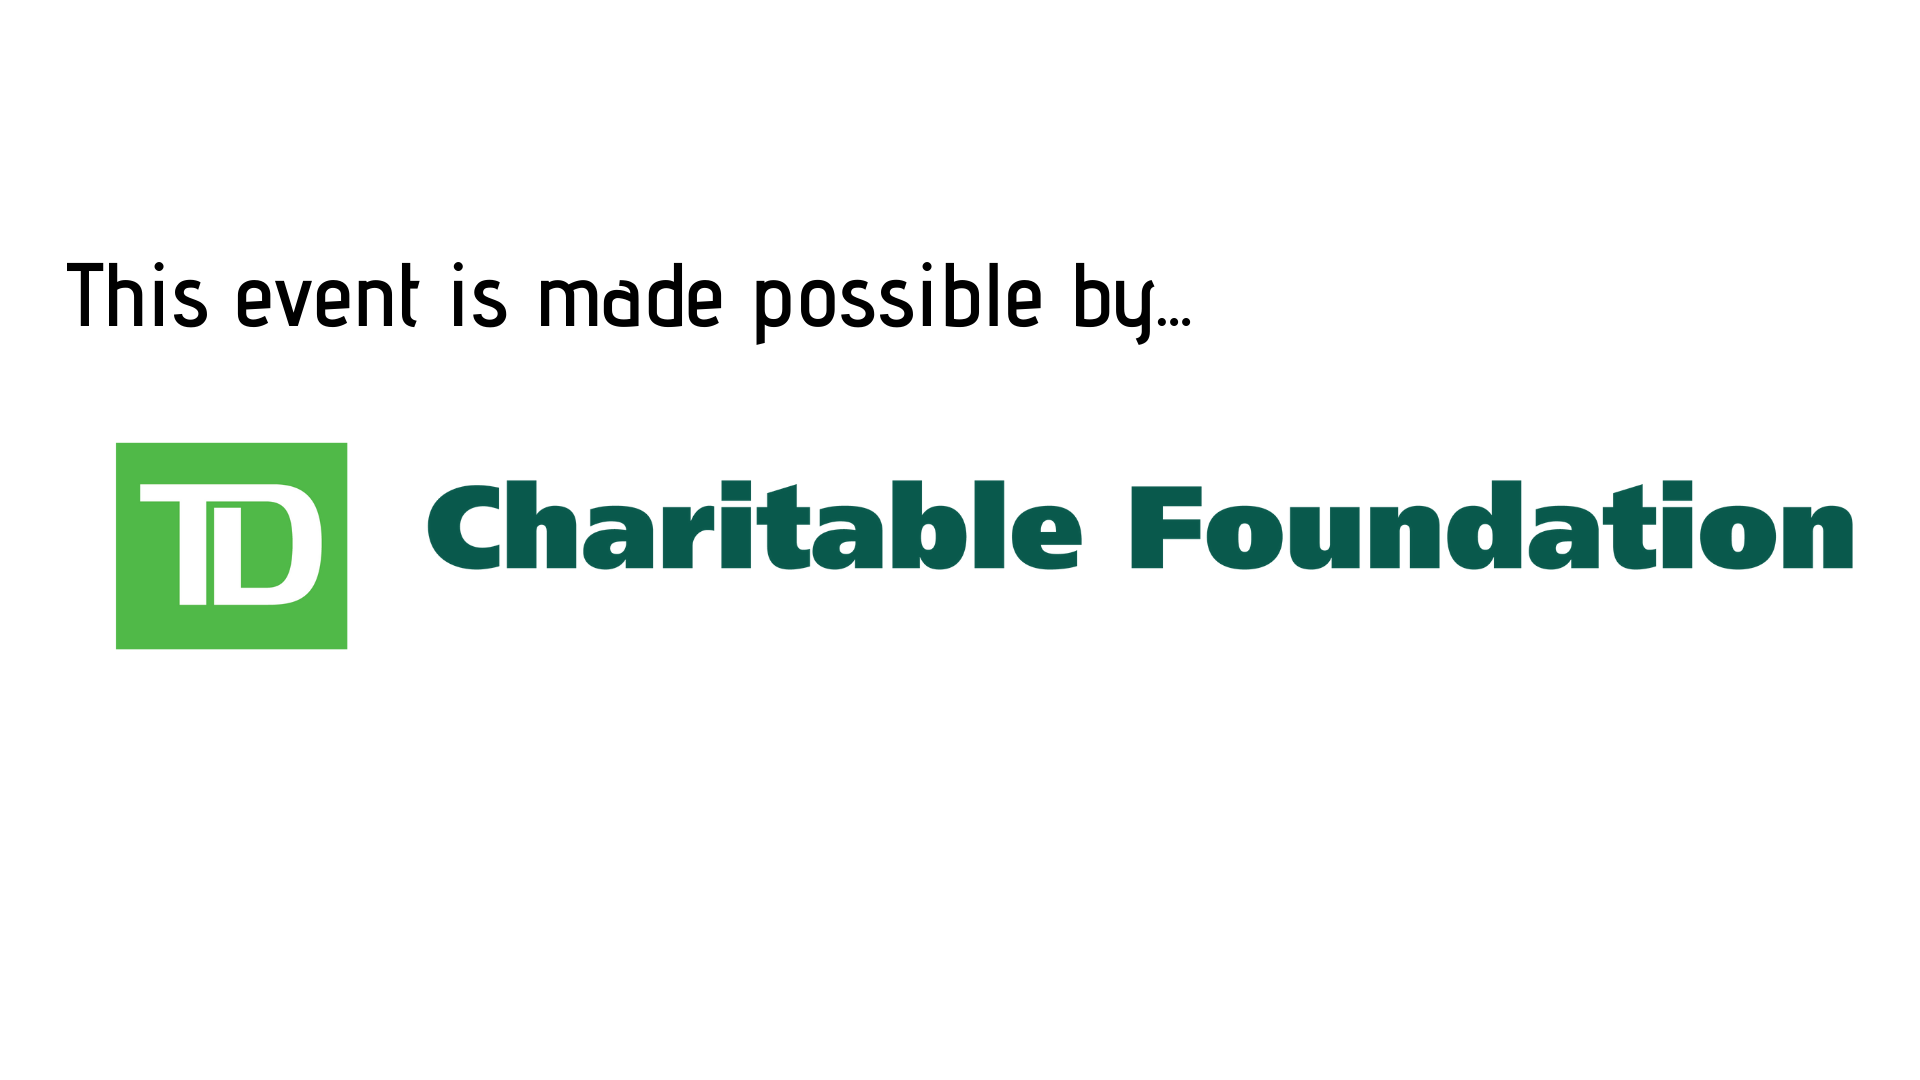 The TD Charitable Foundation